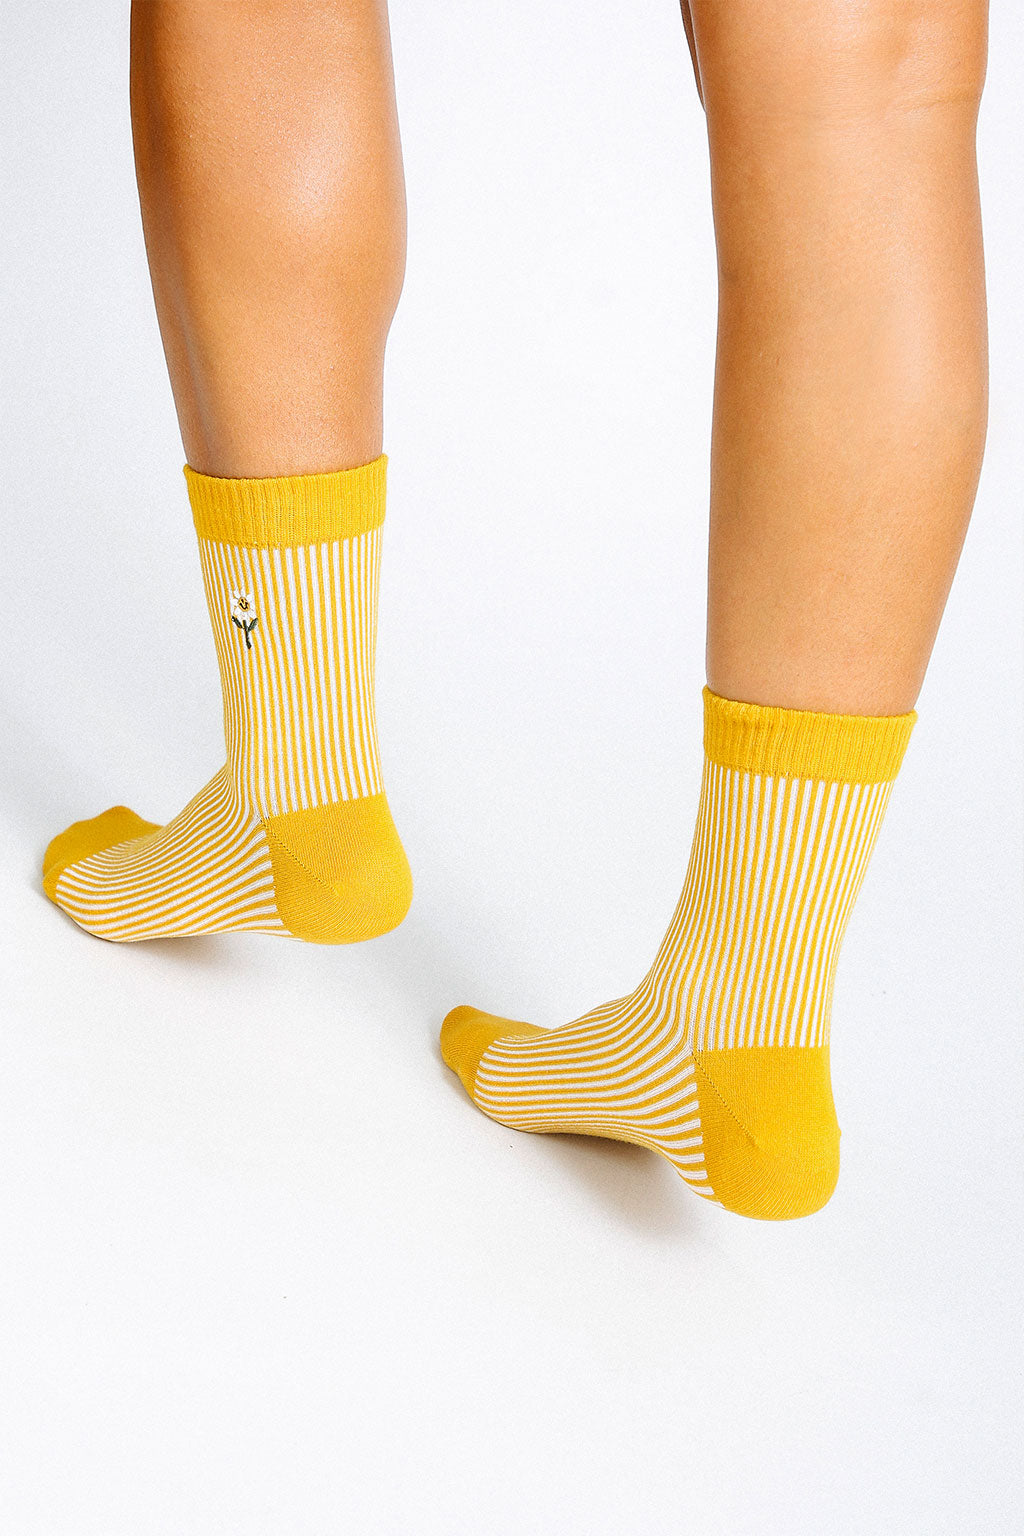 Tailored Union Daisy gold socks